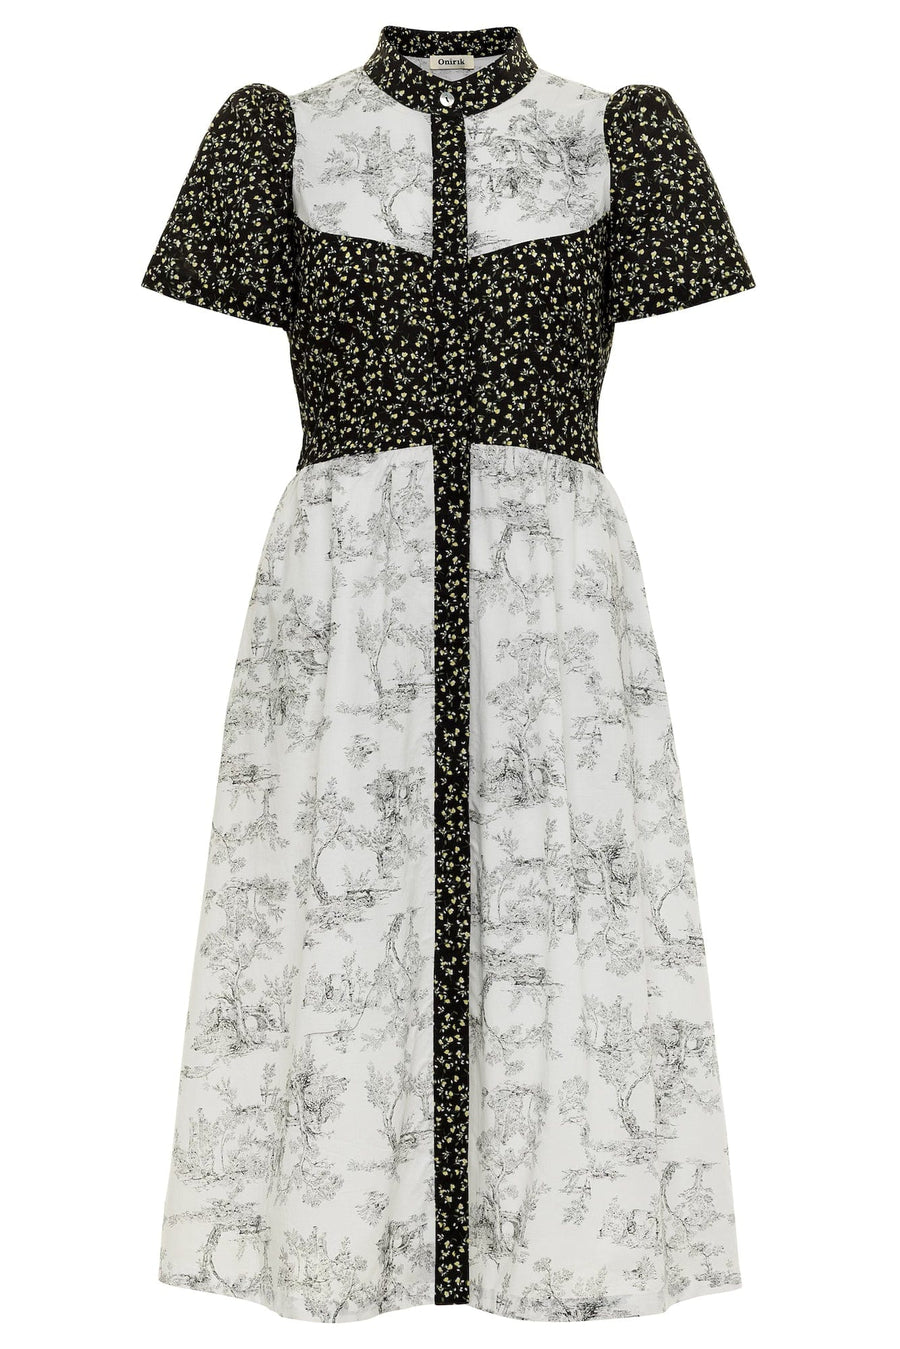 Clover Shirt Dress in Black Mini Floral + Vintage White Toile Print Cotton Voile